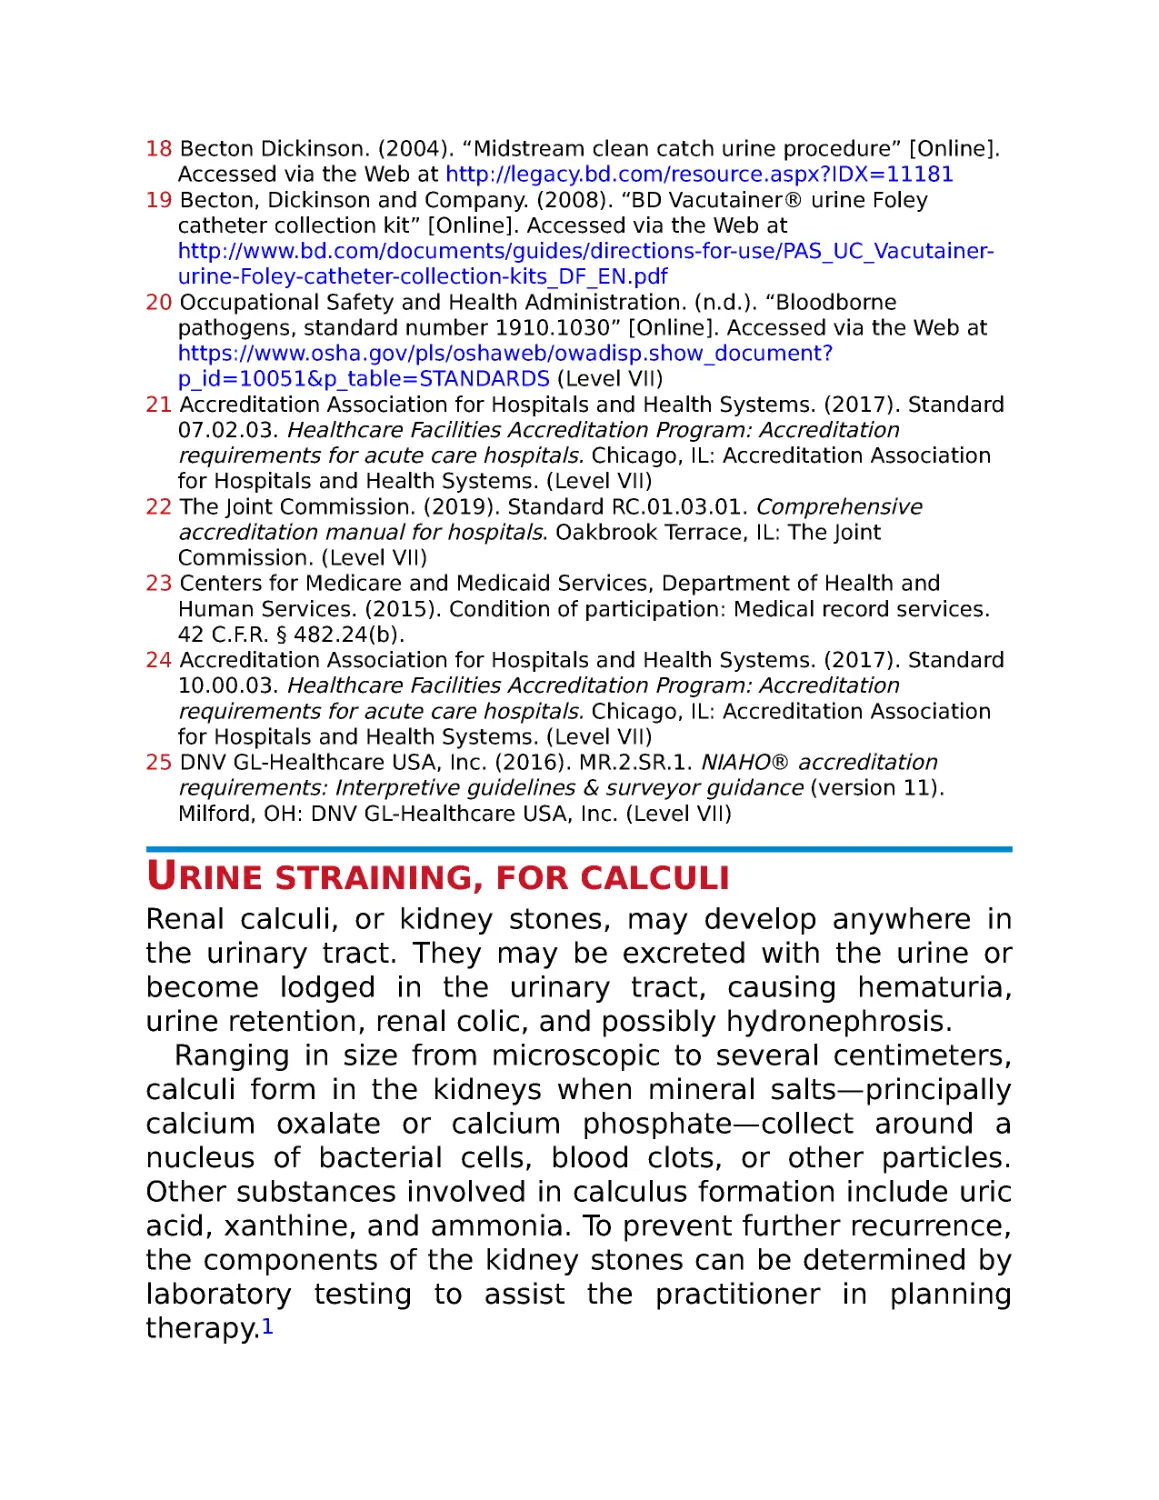 Urine straining, for calculi